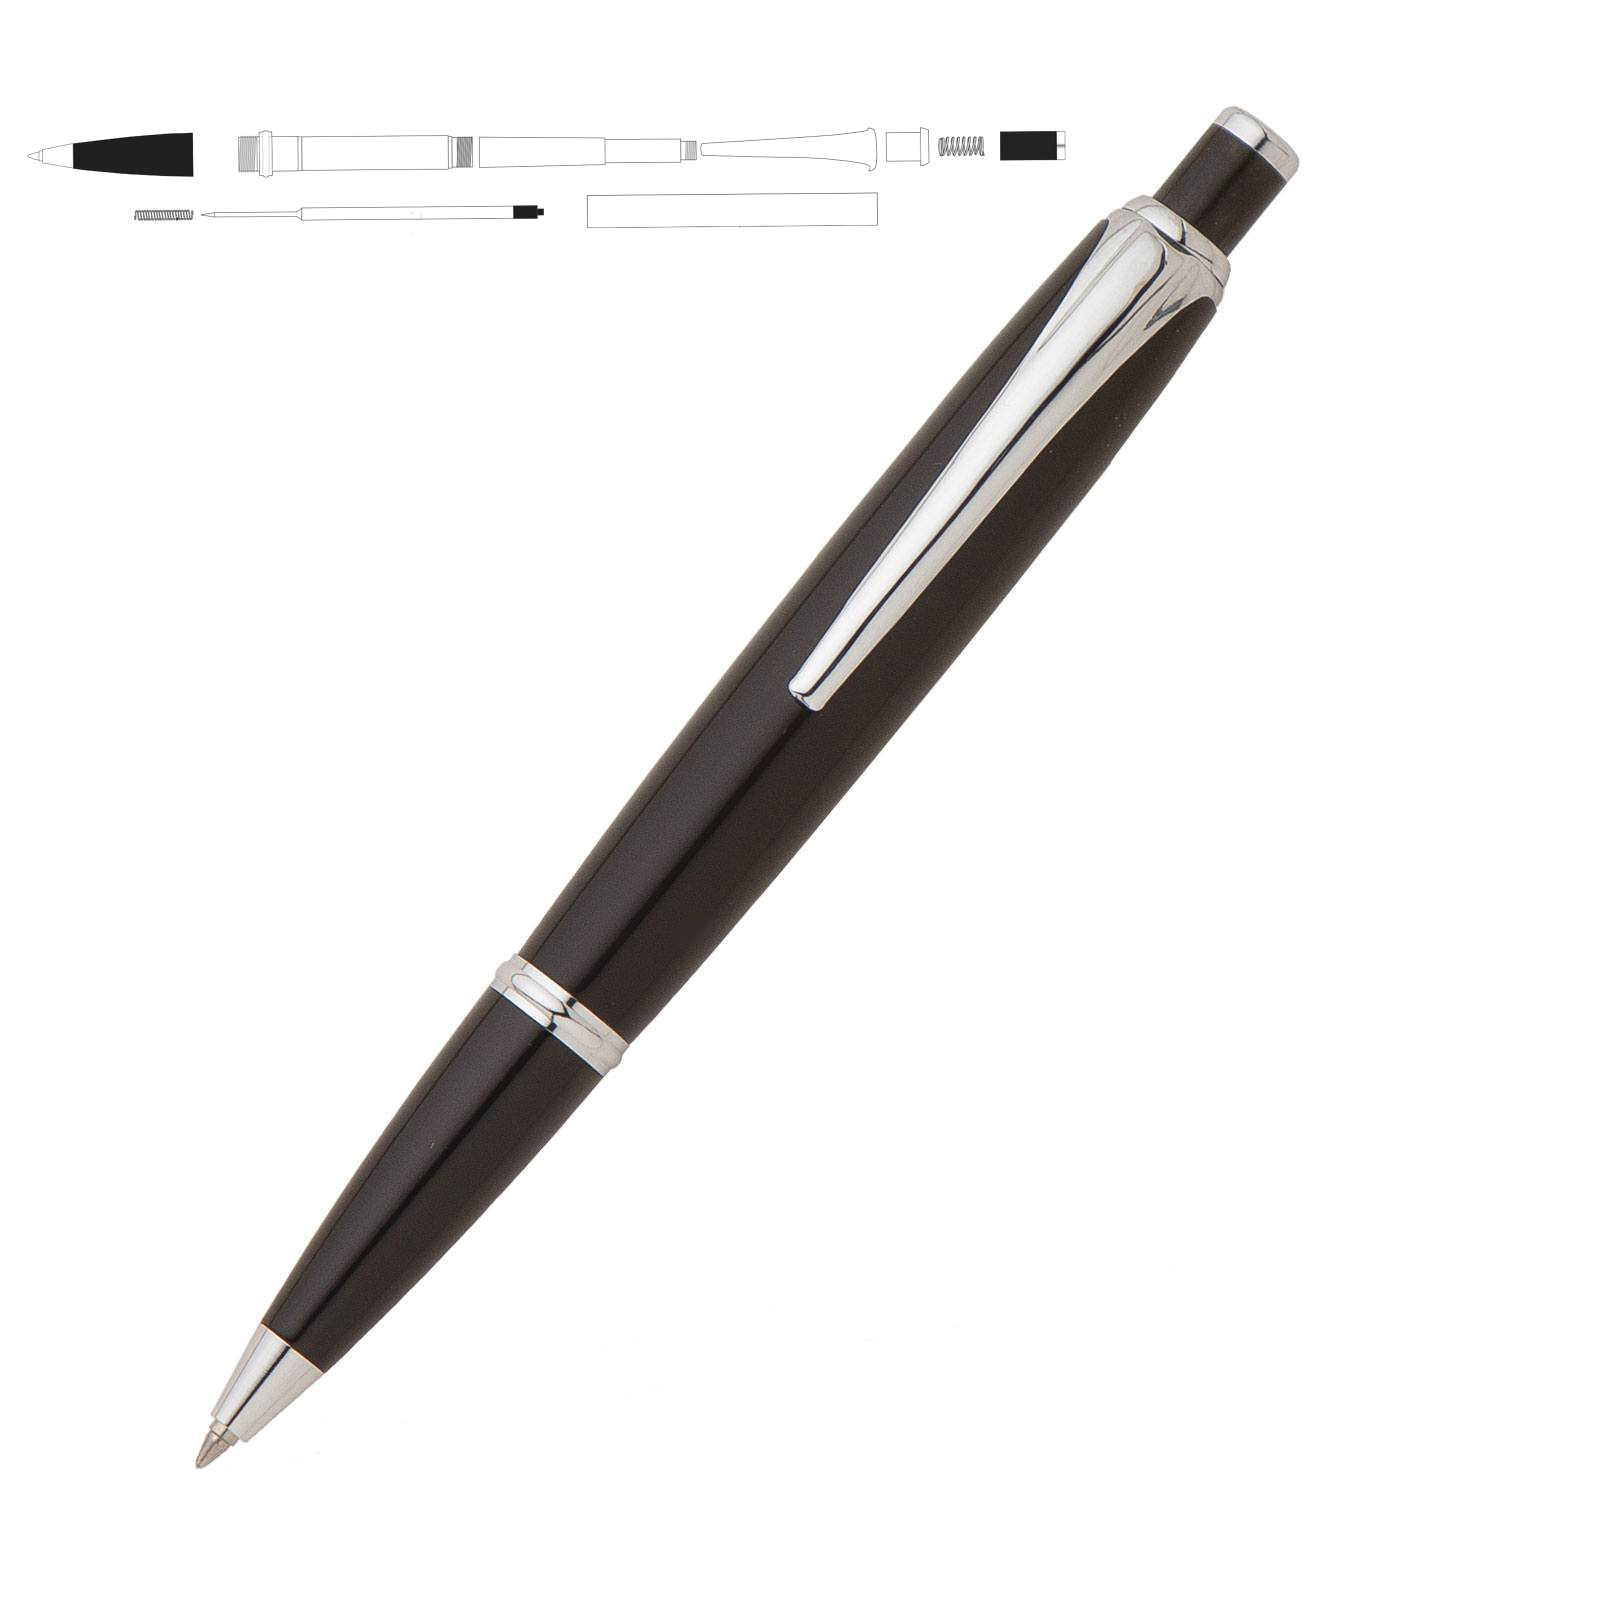 Blue White and Black Compson Pen